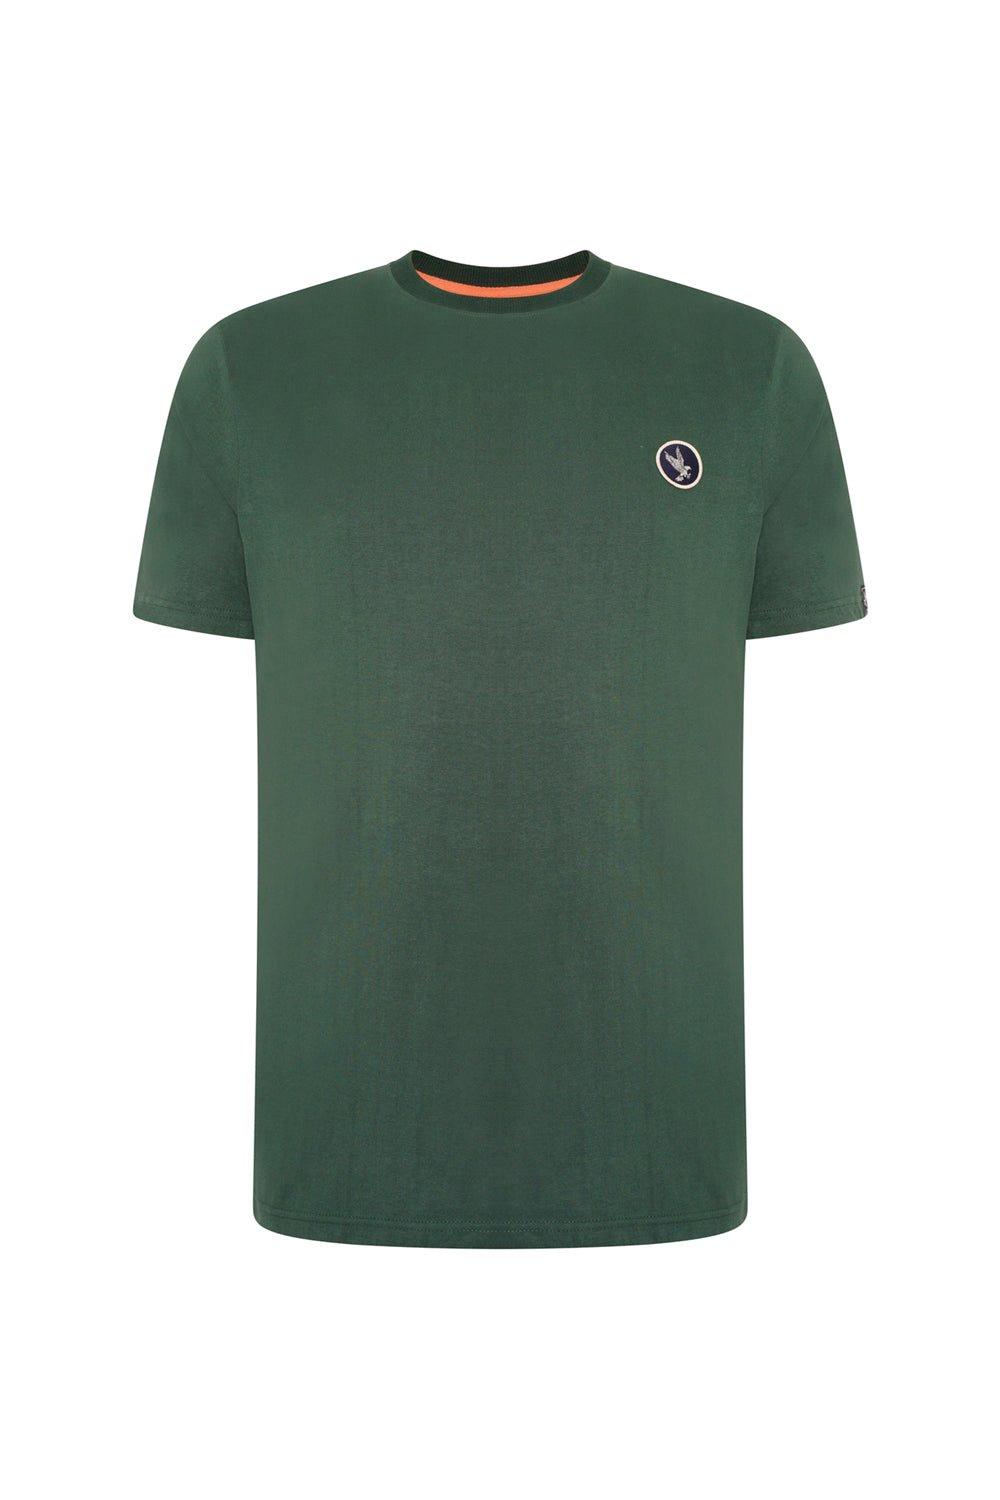 цена Серая футболка с логотипом Hawk Essential Extra-Tall Grey Hawk, зеленый